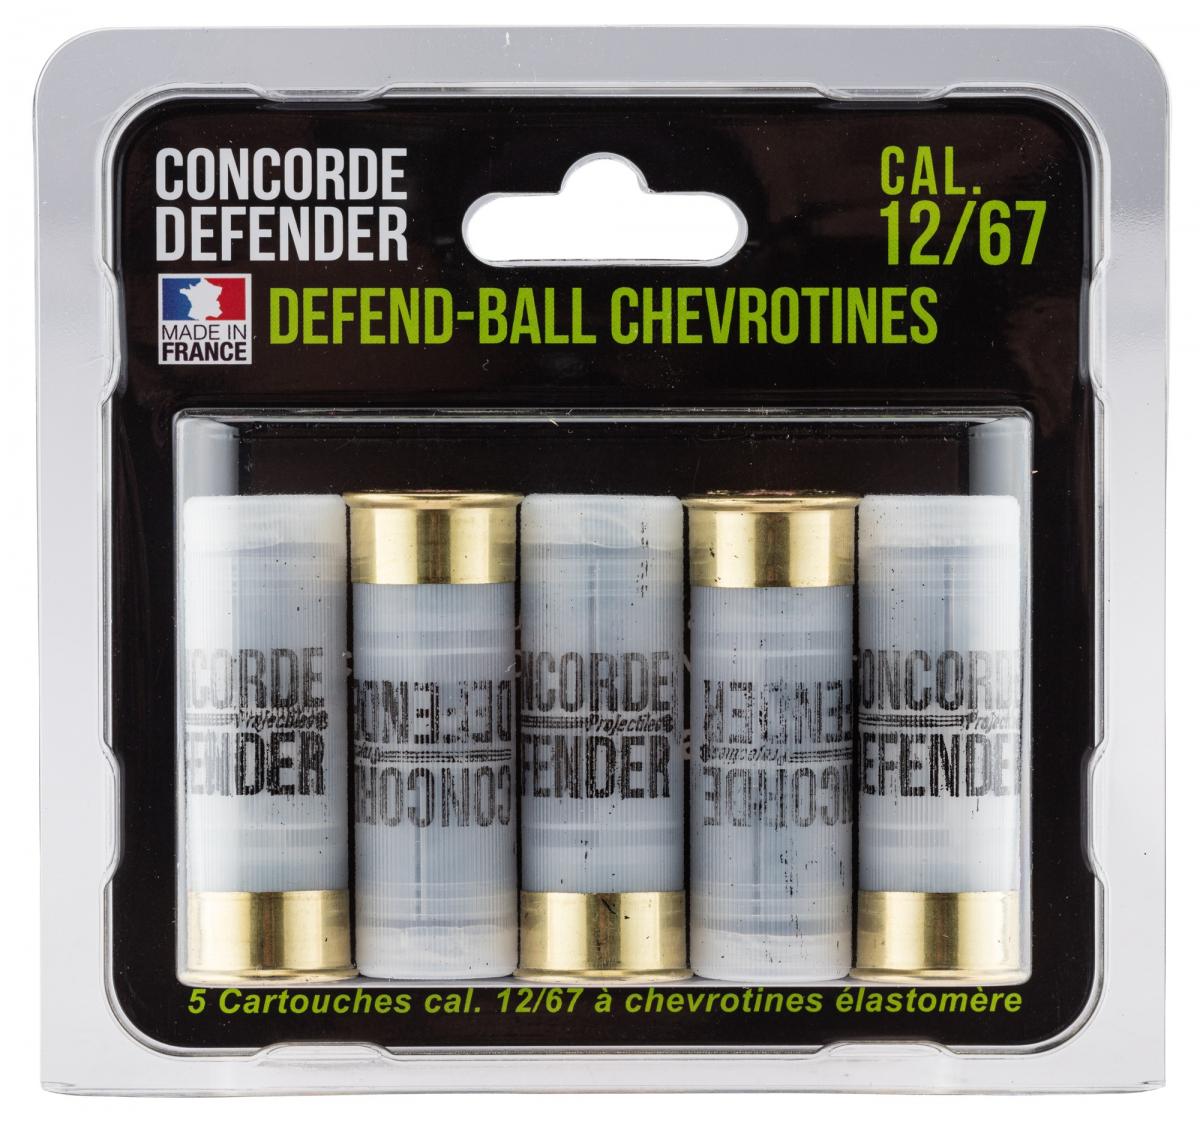 Cartouches Defend-Ball cal. 12/67 chevrotines Elastomère